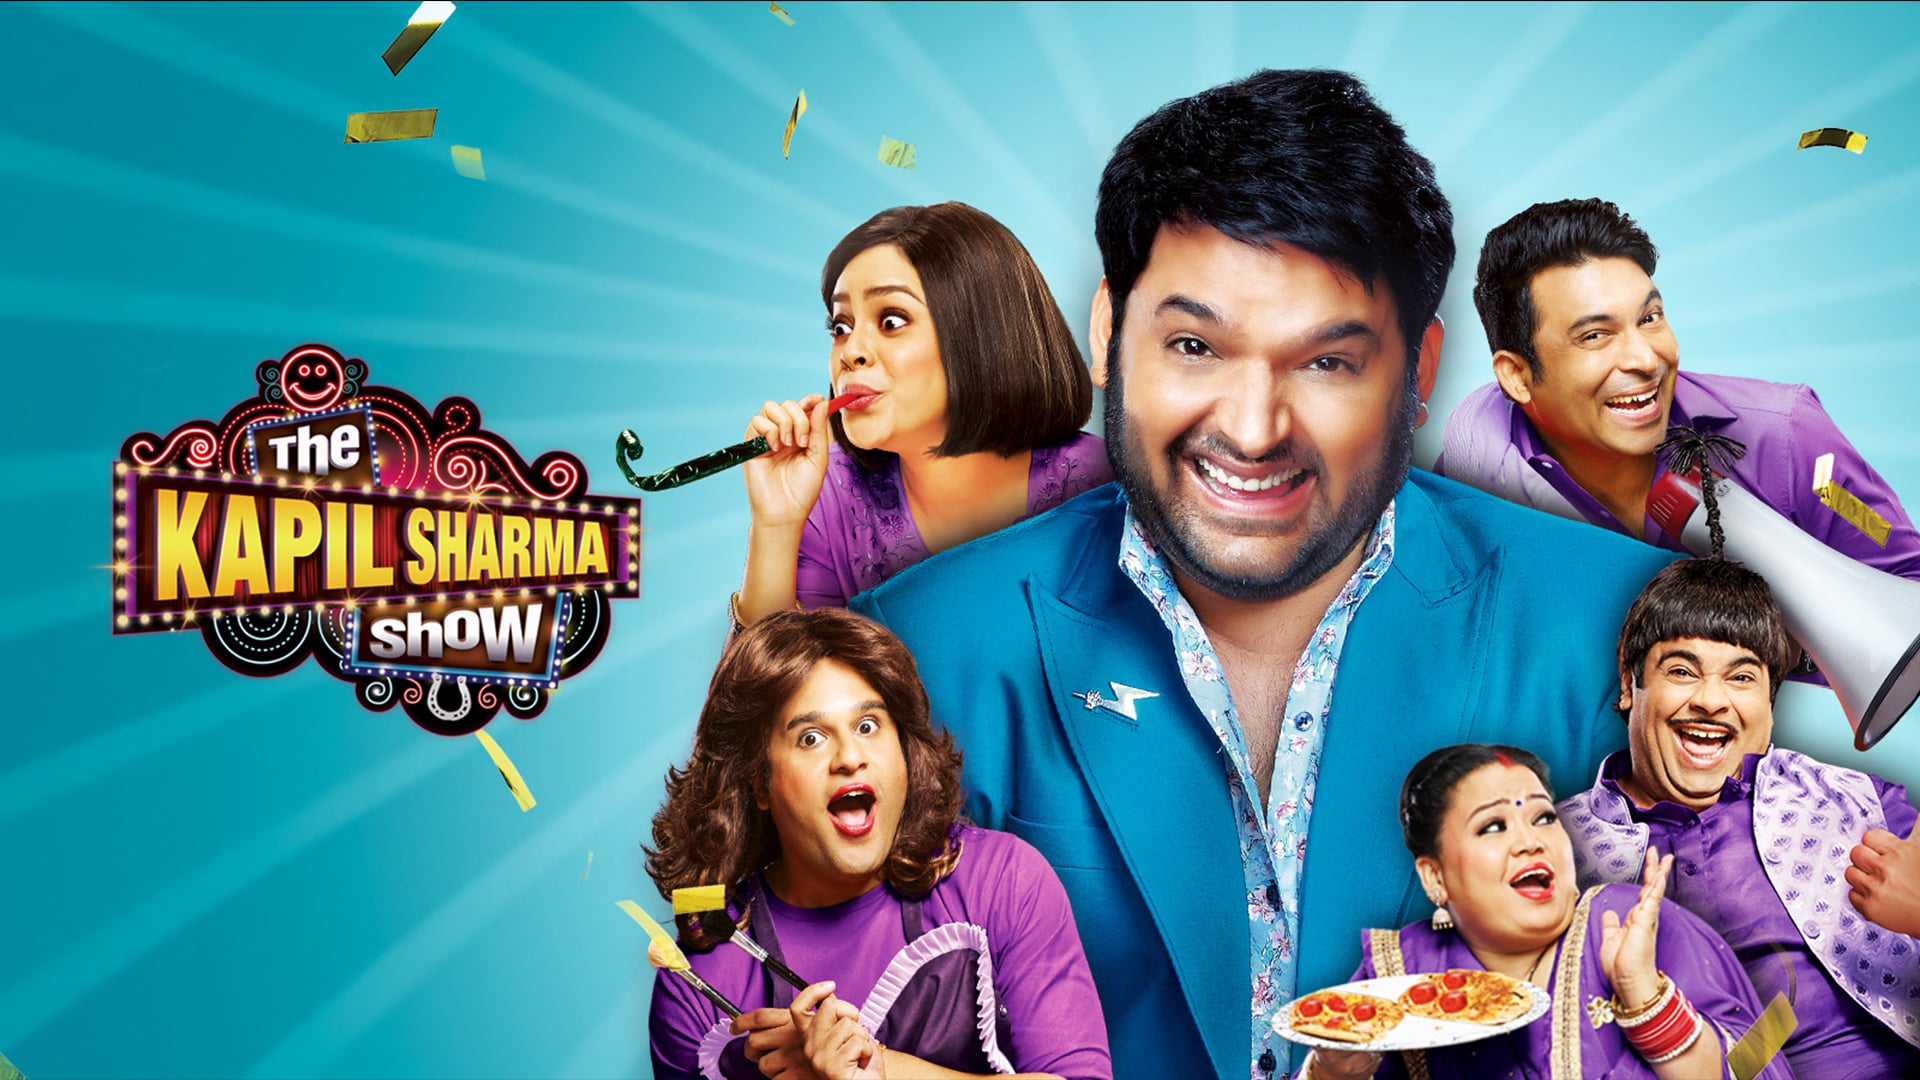 The Kapil Sharma Show - Season 1 Episode 49 : Harshvardhan Kapoor, Anil Kapoor and Saiyami Kher